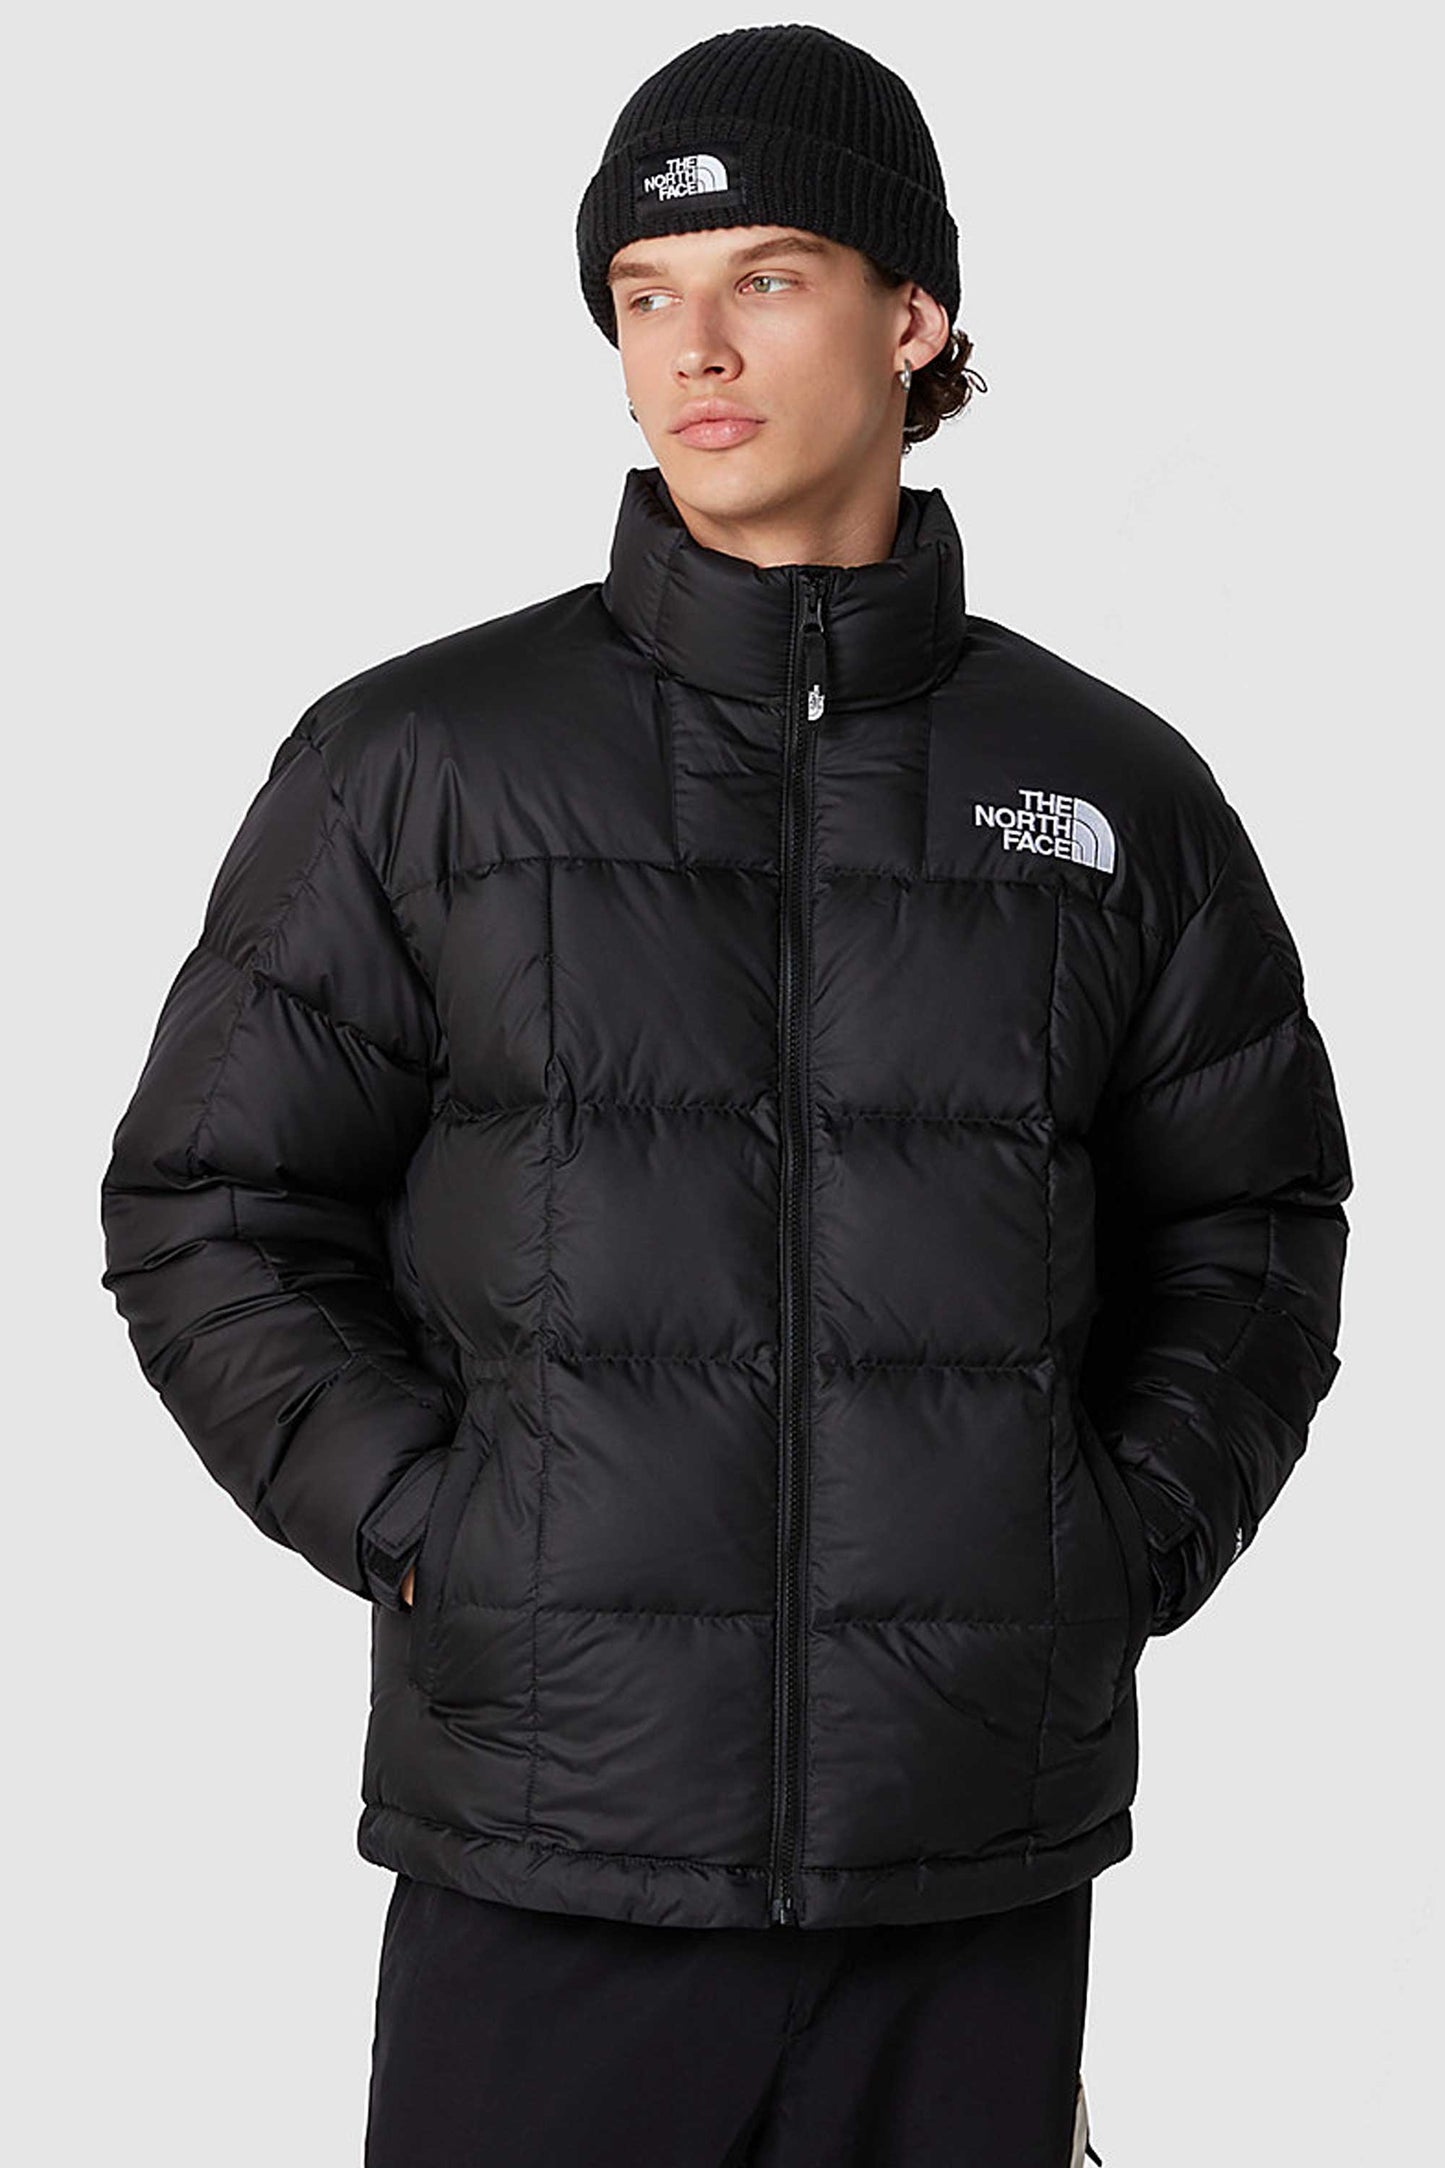 Pukas-Surf-Shop-the-north-face-jacket-man-black-lhotse